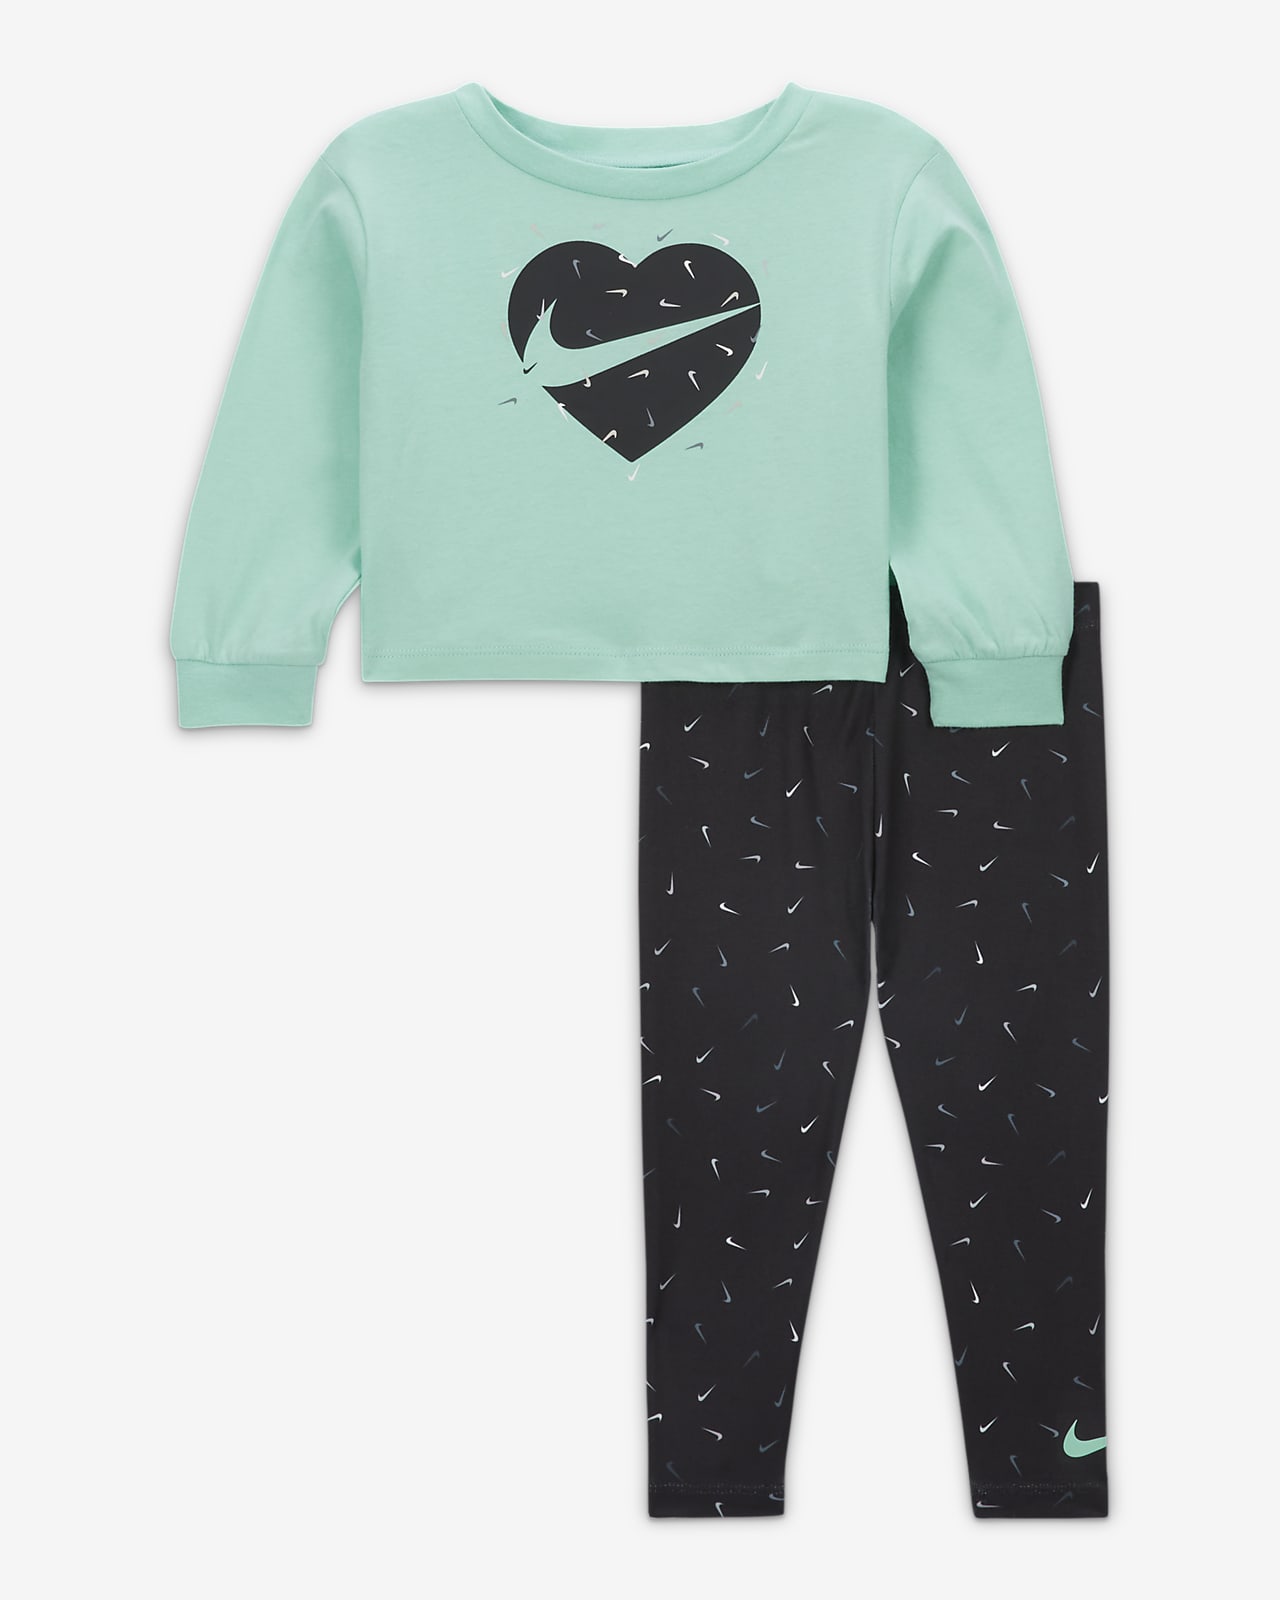 Teal Heart Foil Print Sweatshirt